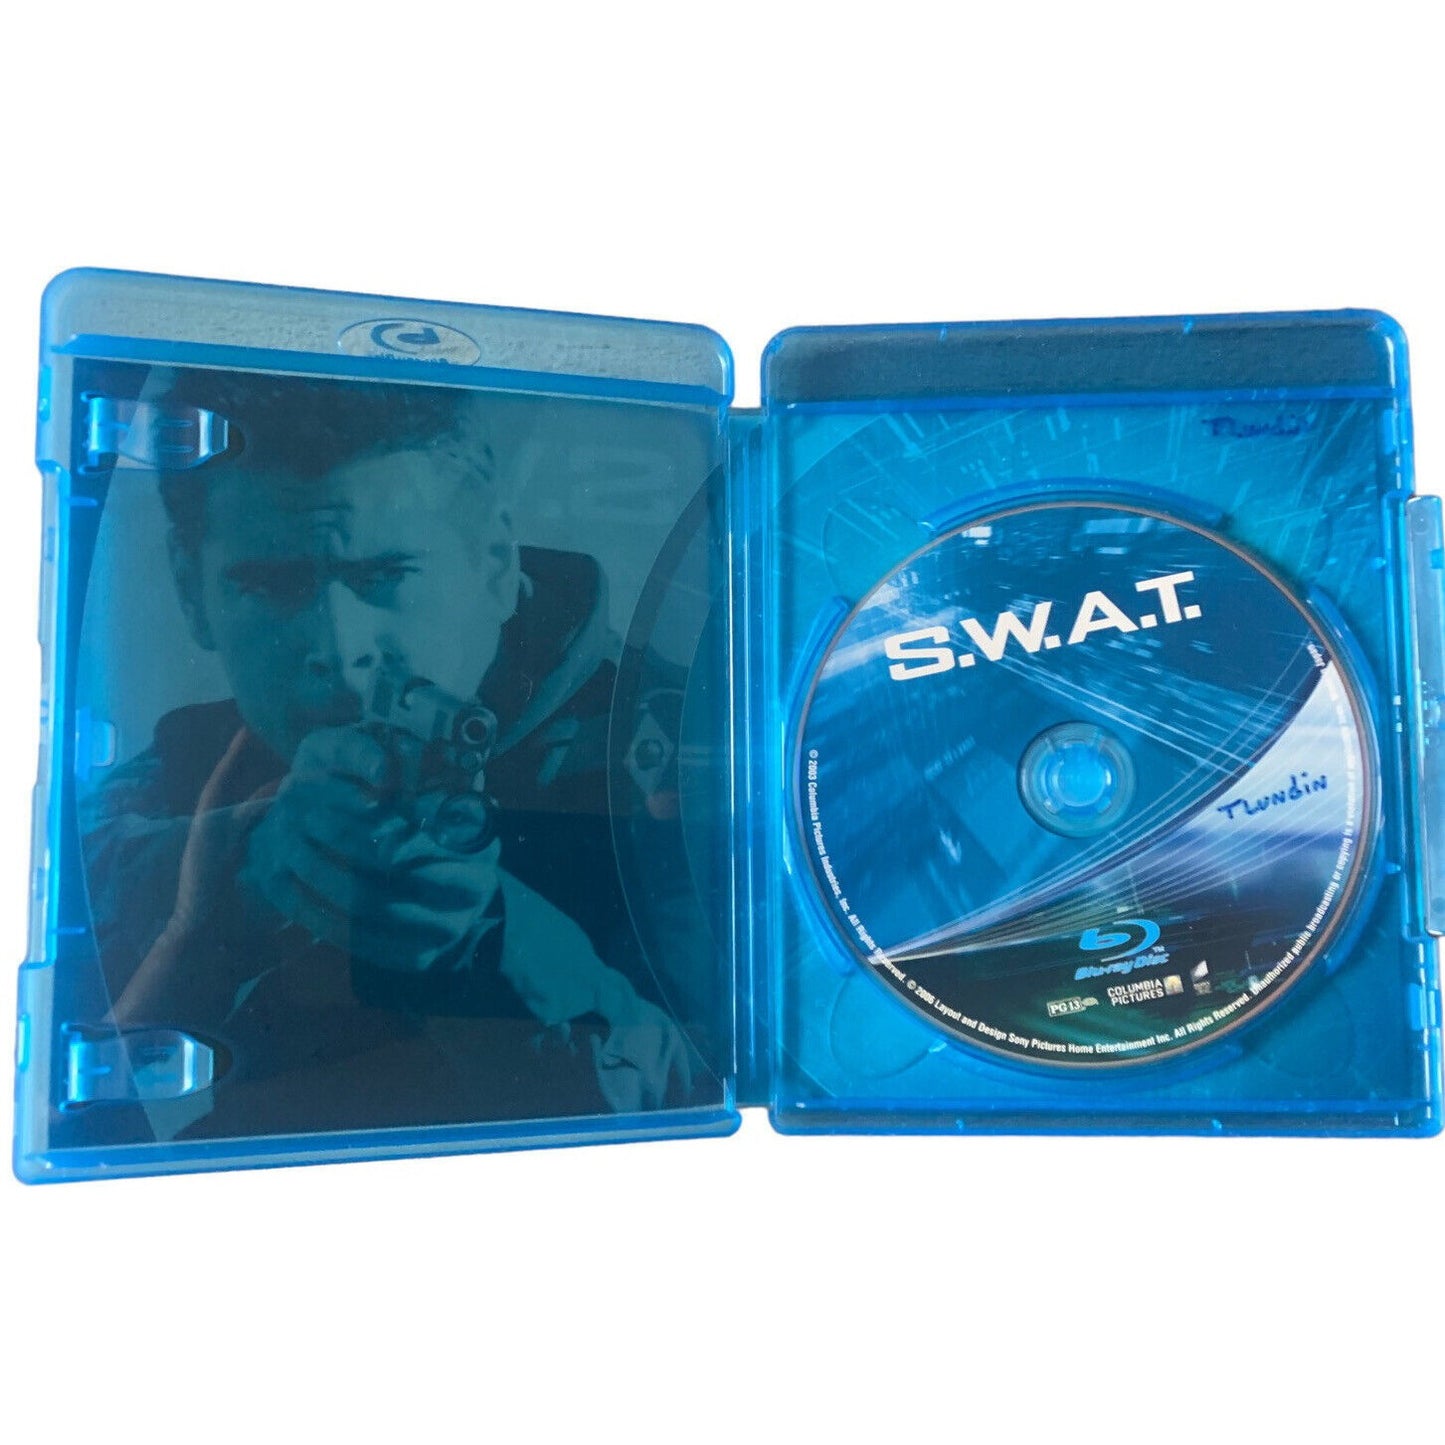 S.W.A.T. Blu-Ray DVD